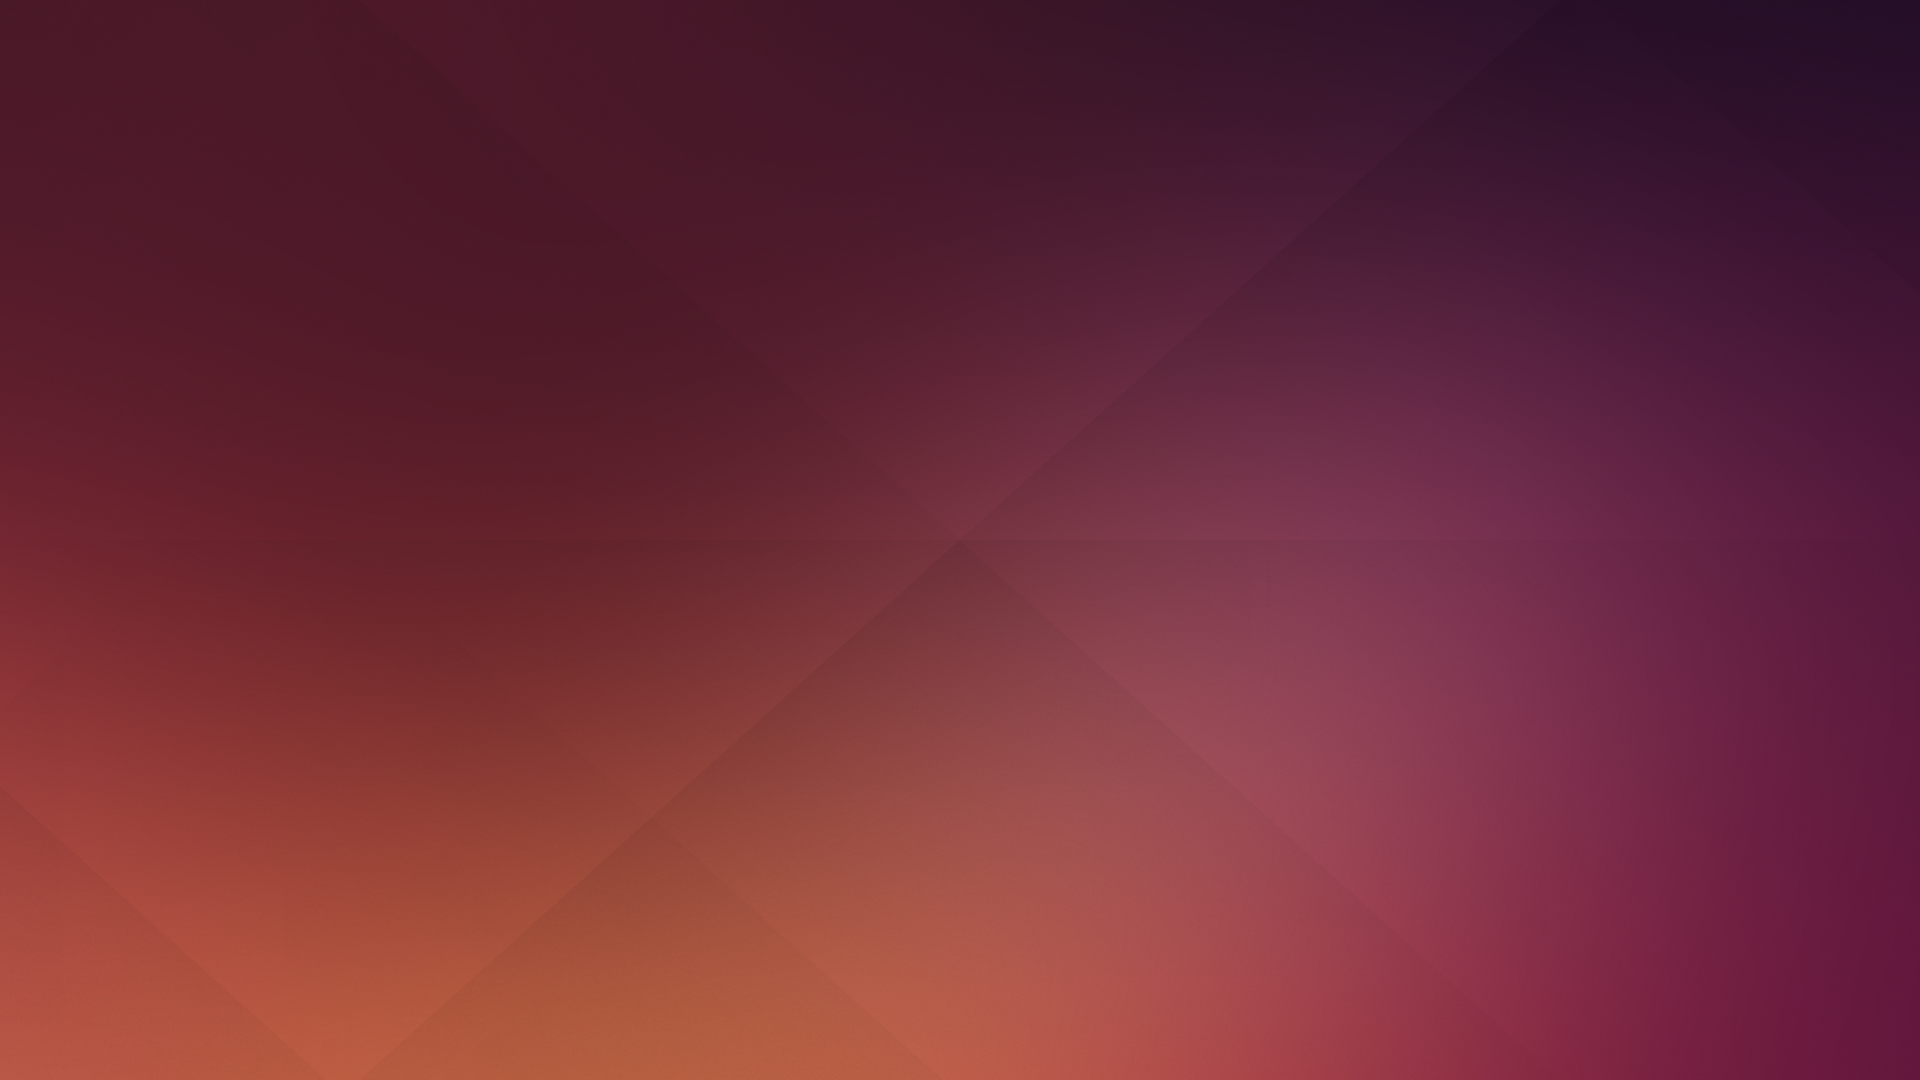 Ubuntu Default Wallpaper By O L A V On